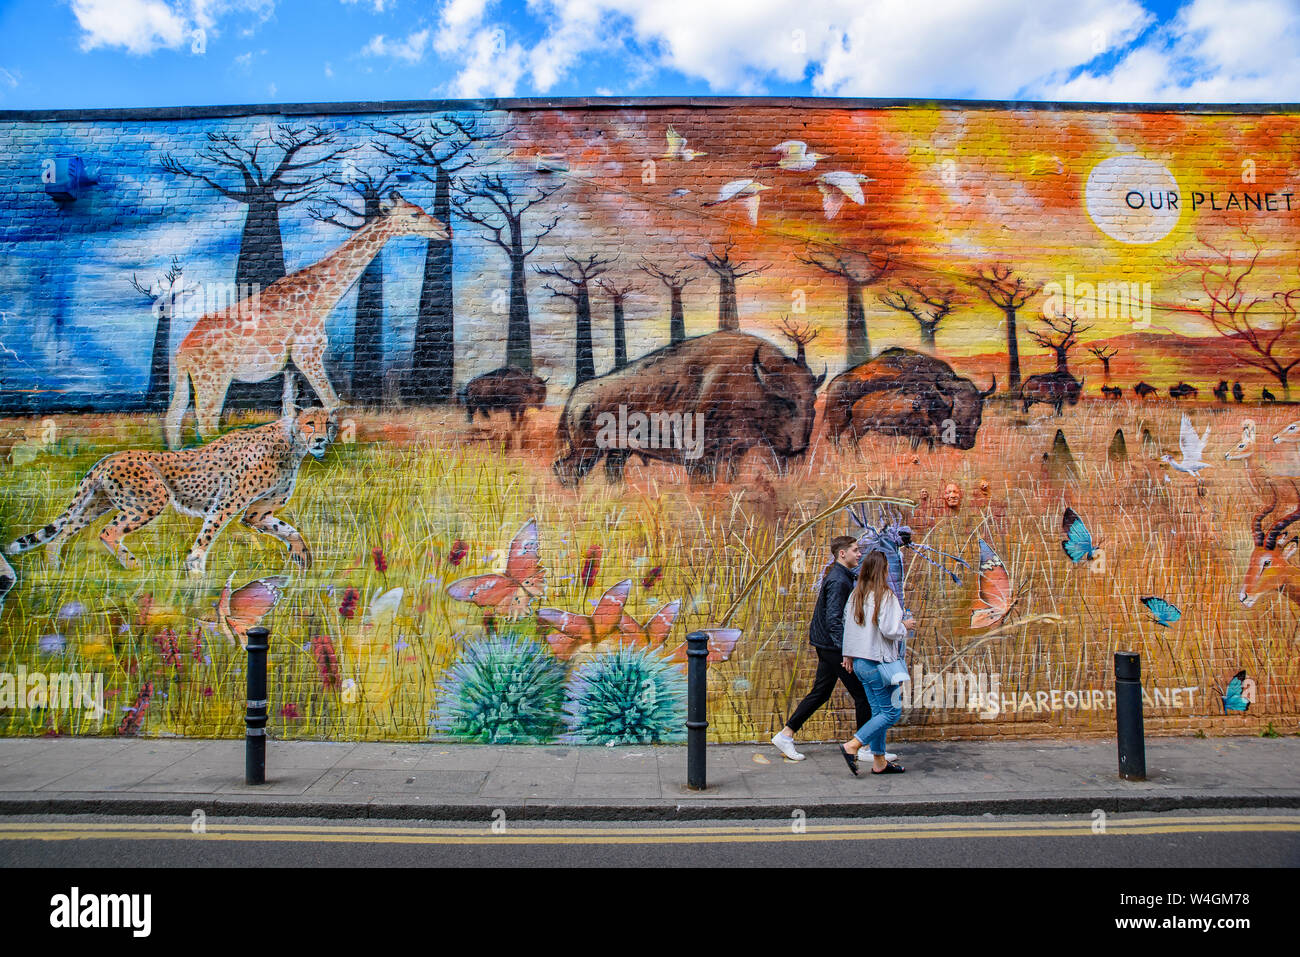 People passing by the graffiti wall art at Brick Lane Market in London, United Kingdom Stock Photo